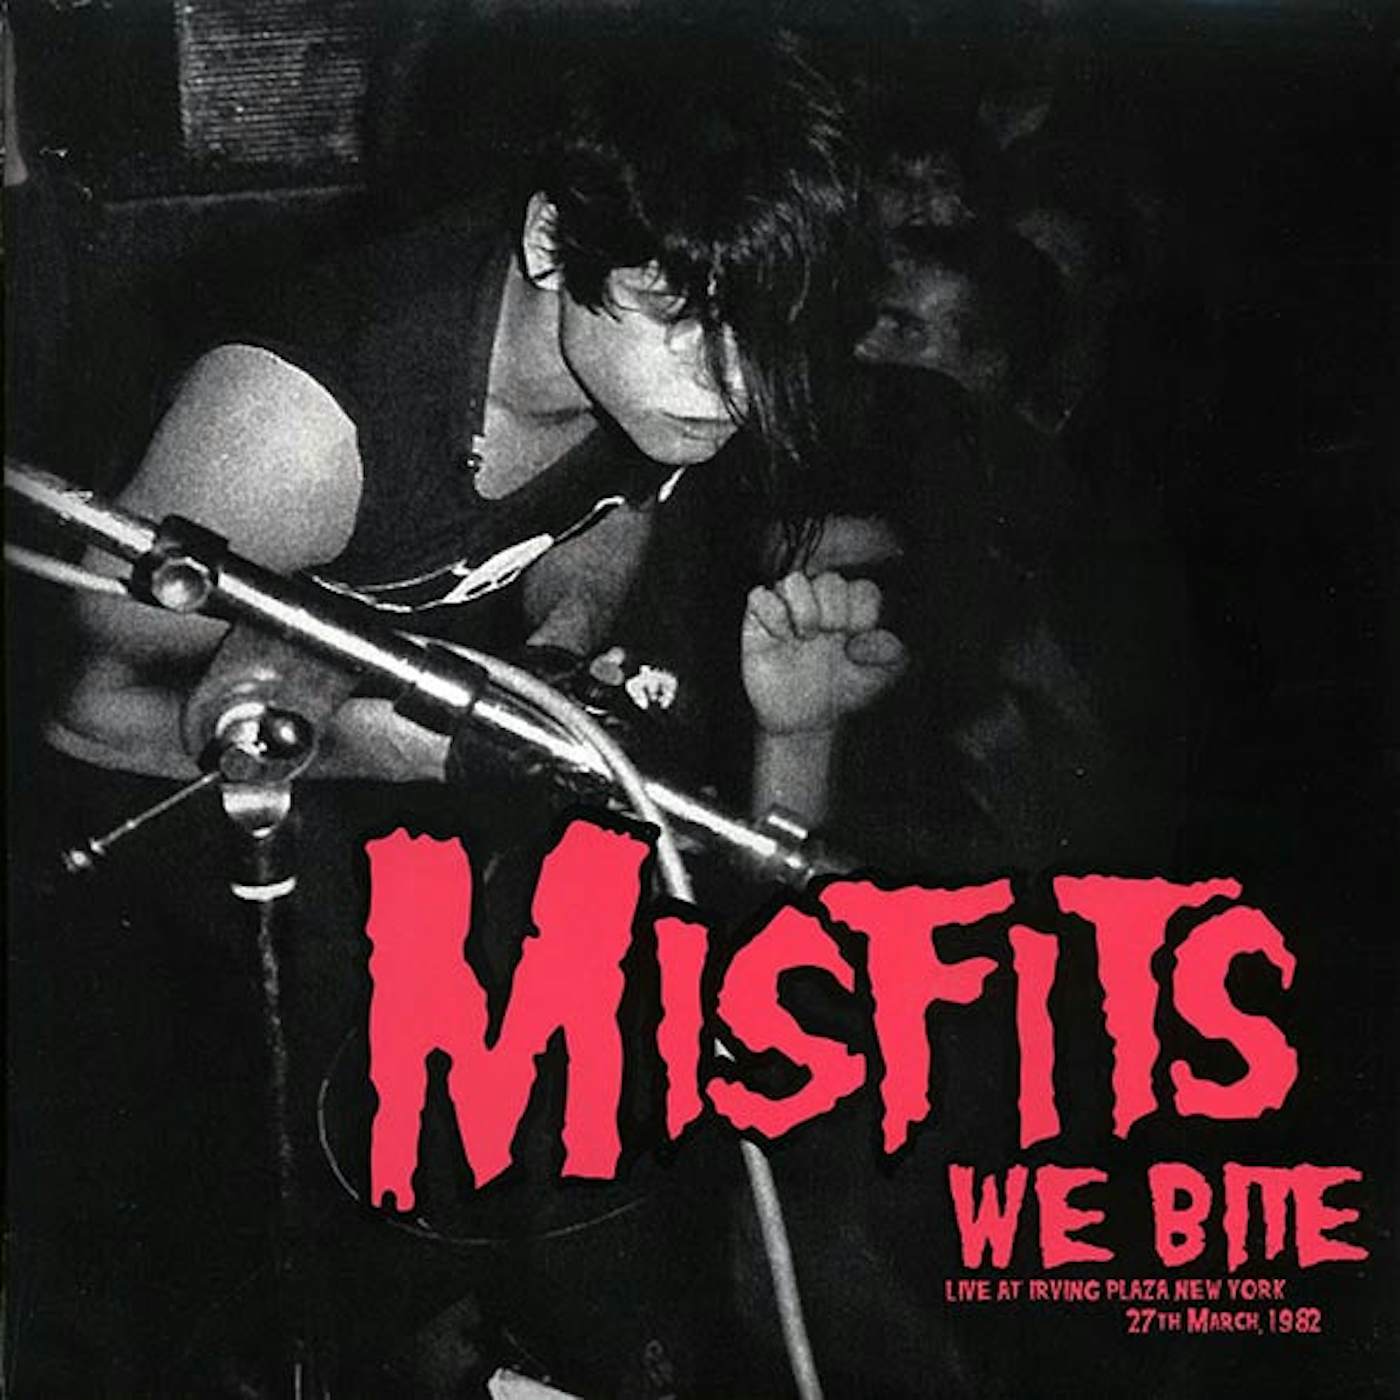 Misfits  LP -  We Bite: Live At Irving Plaza, New York, 27th March 1982 (ltd. 500 copies made) (Vinyl)